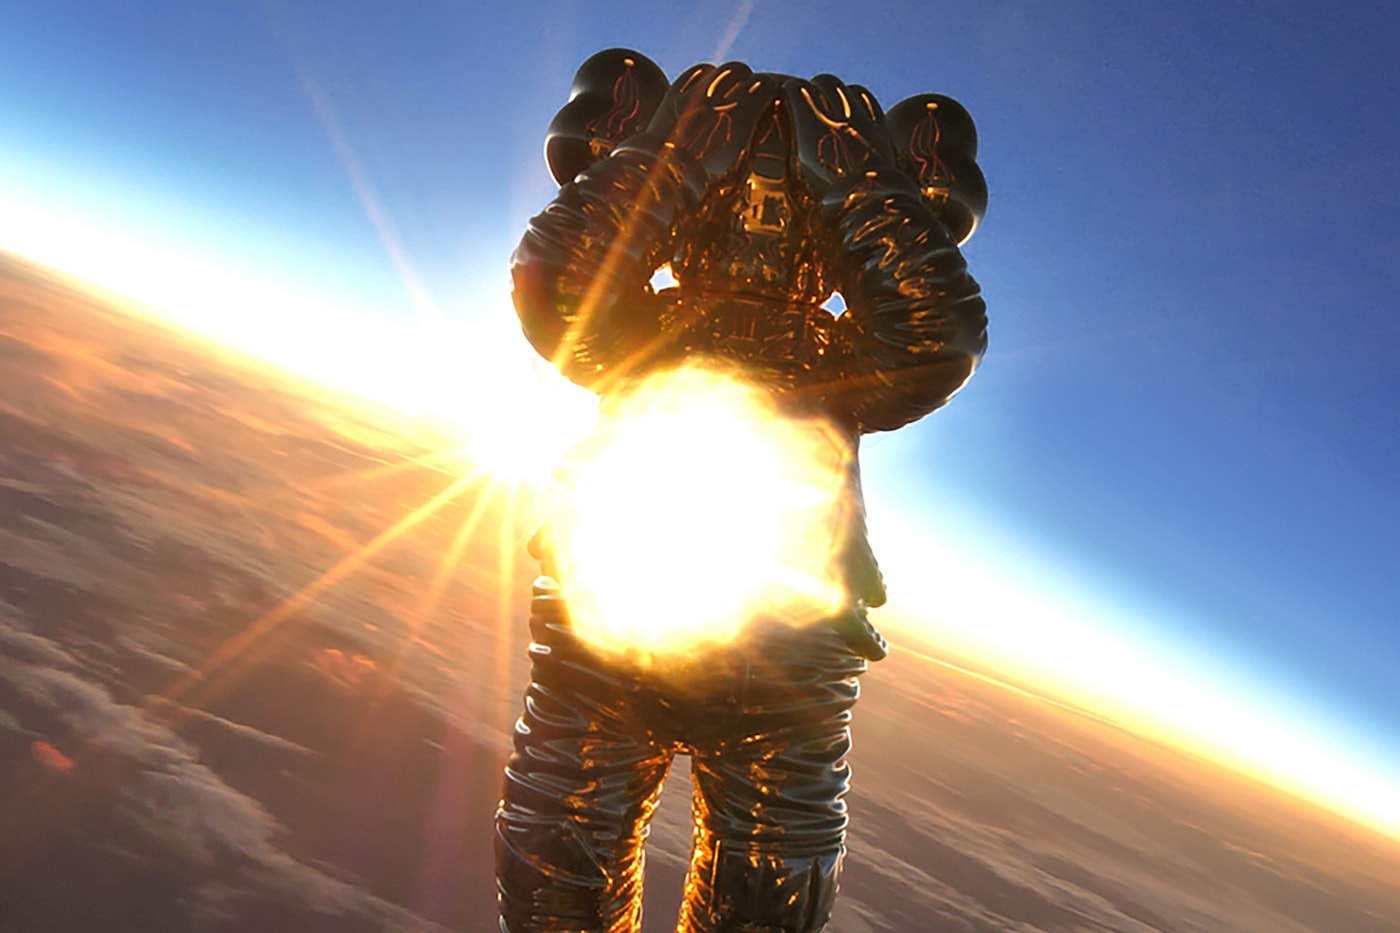 «KAWS:HOLIDAY SPACE» Companion AllRightsReserved, коллекционная фигурка космонавта размером 11,5 дюймов, три цвета: золото, серебро, черный